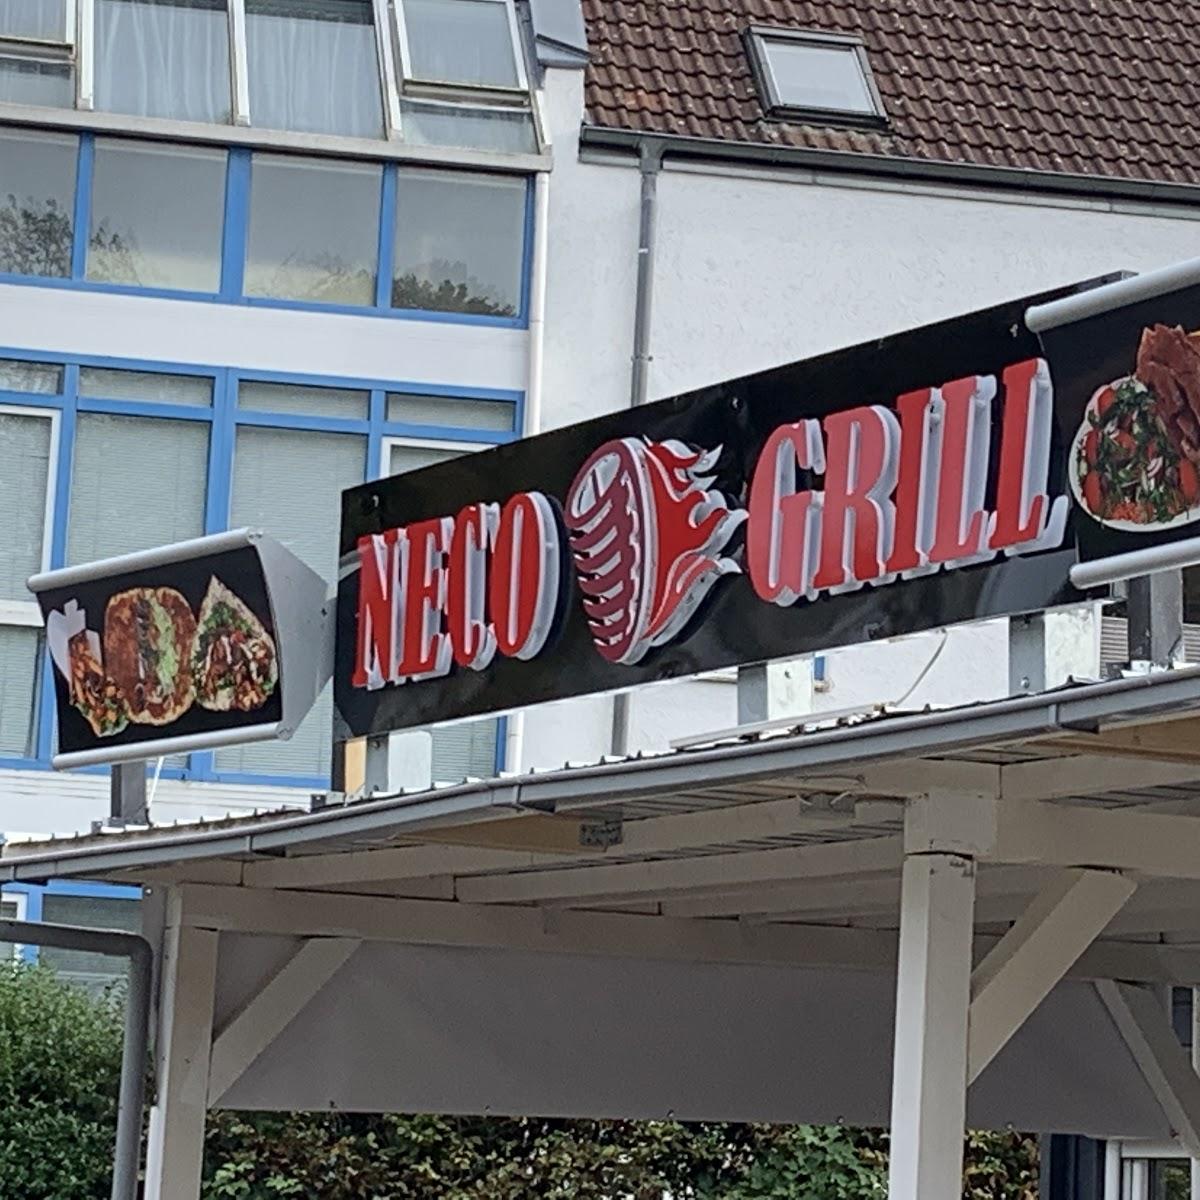 Restaurant "Neco grill" in  Bremen